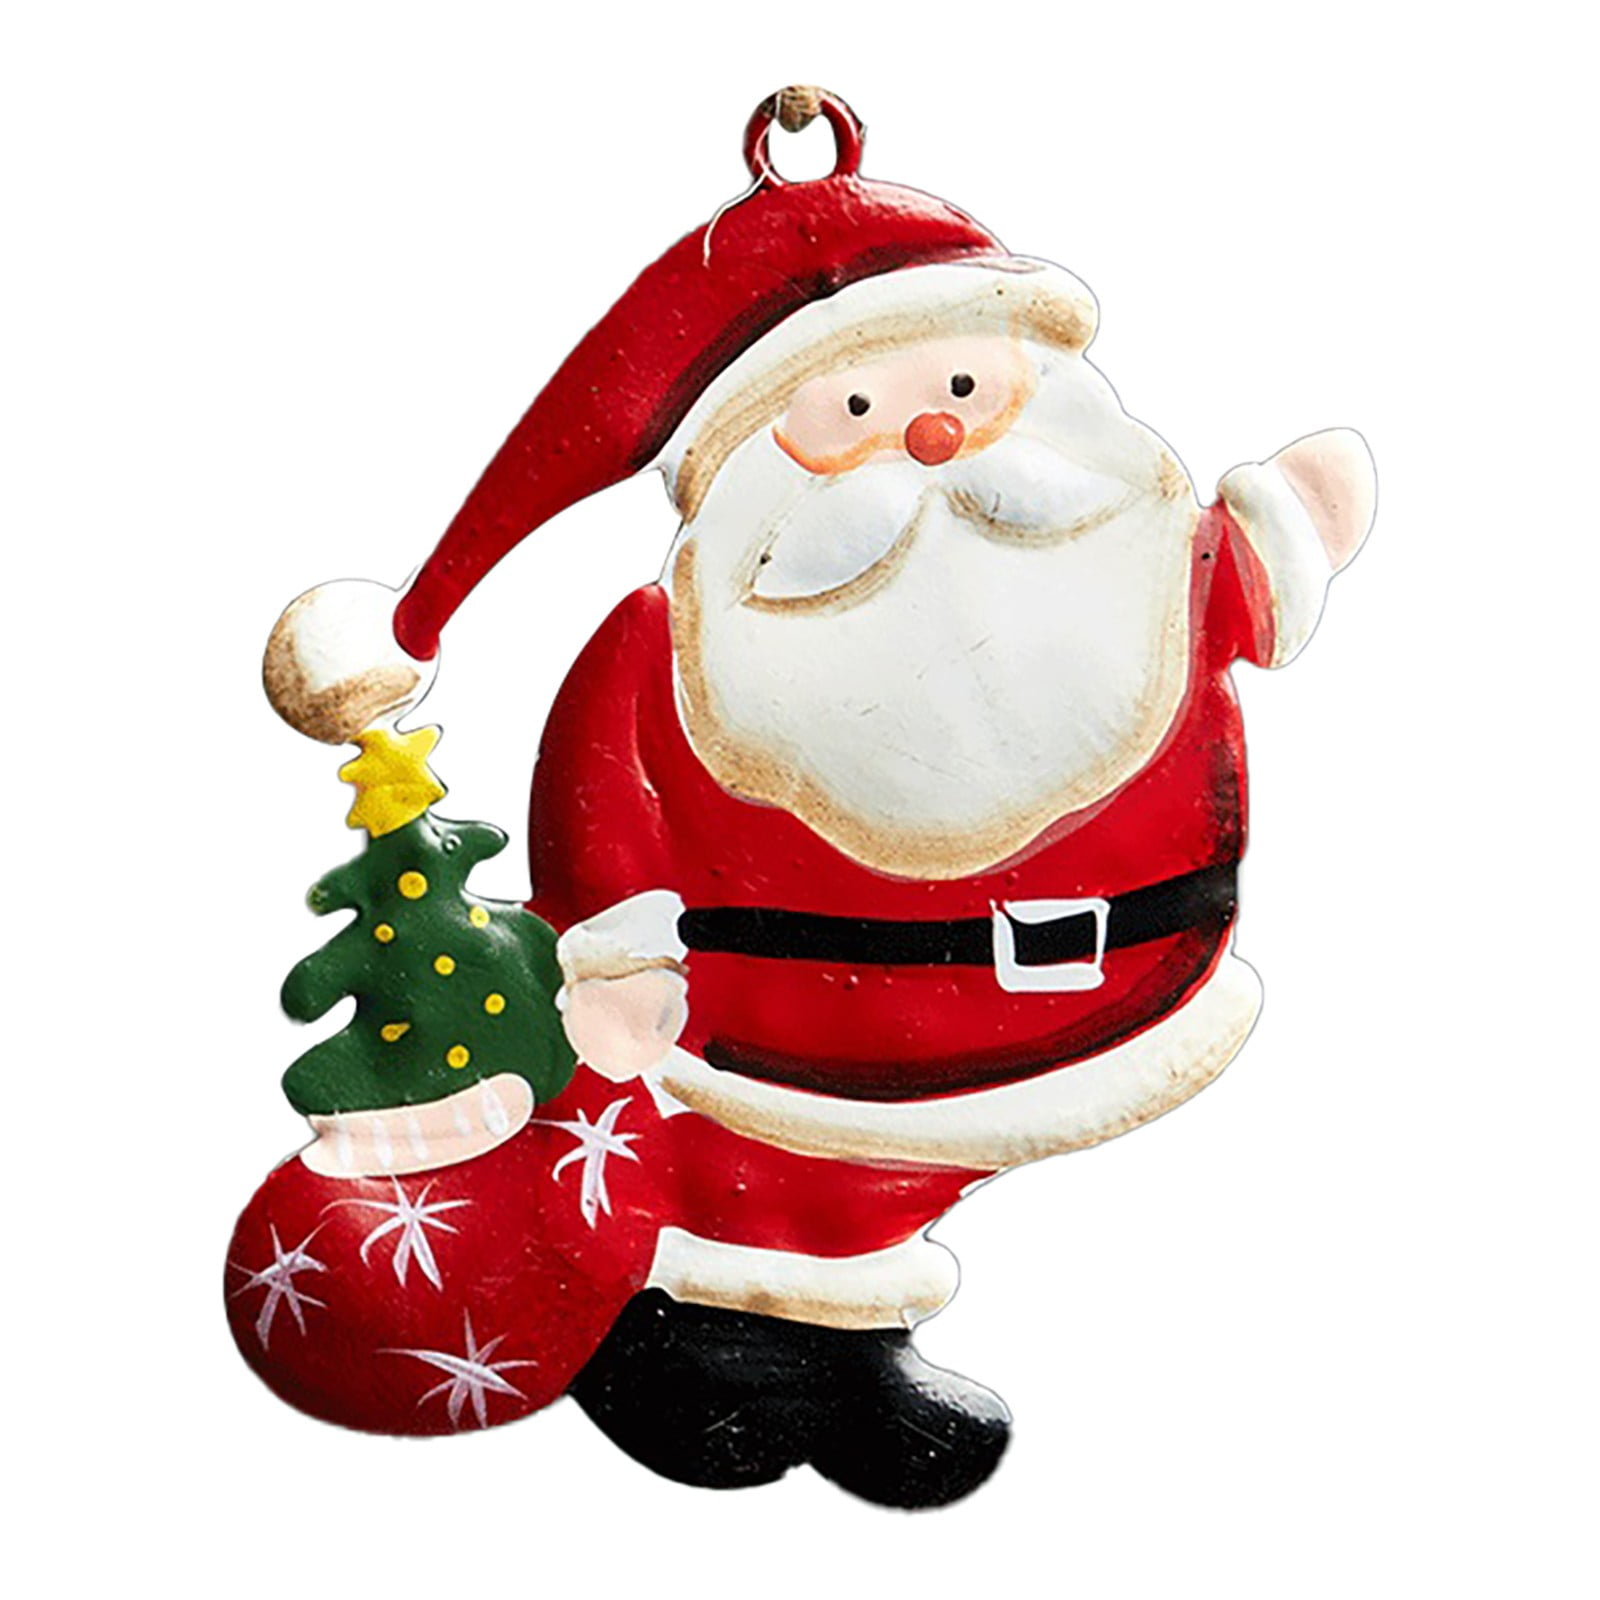 3 PCS Gift Pendant Set Wooden Hand Painted Santa Claus Snowman Christmas 